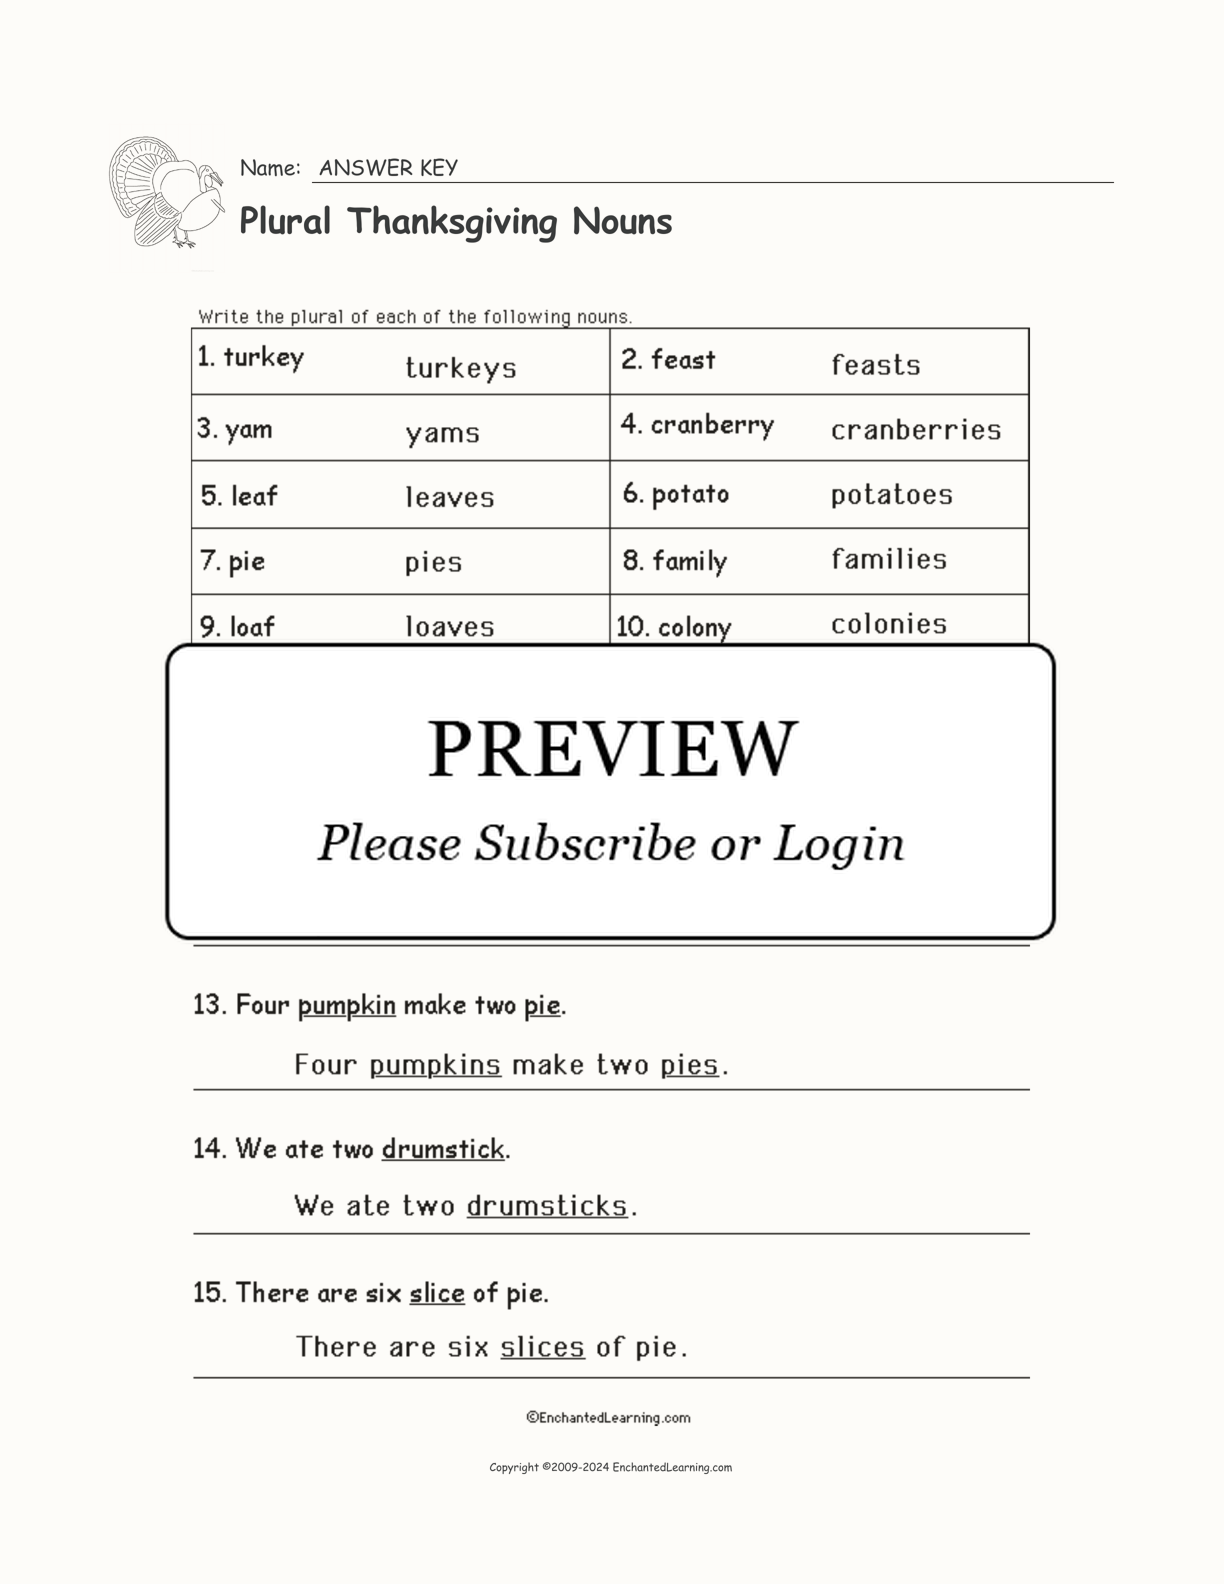 Plural Thanksgiving Nouns interactive worksheet page 2